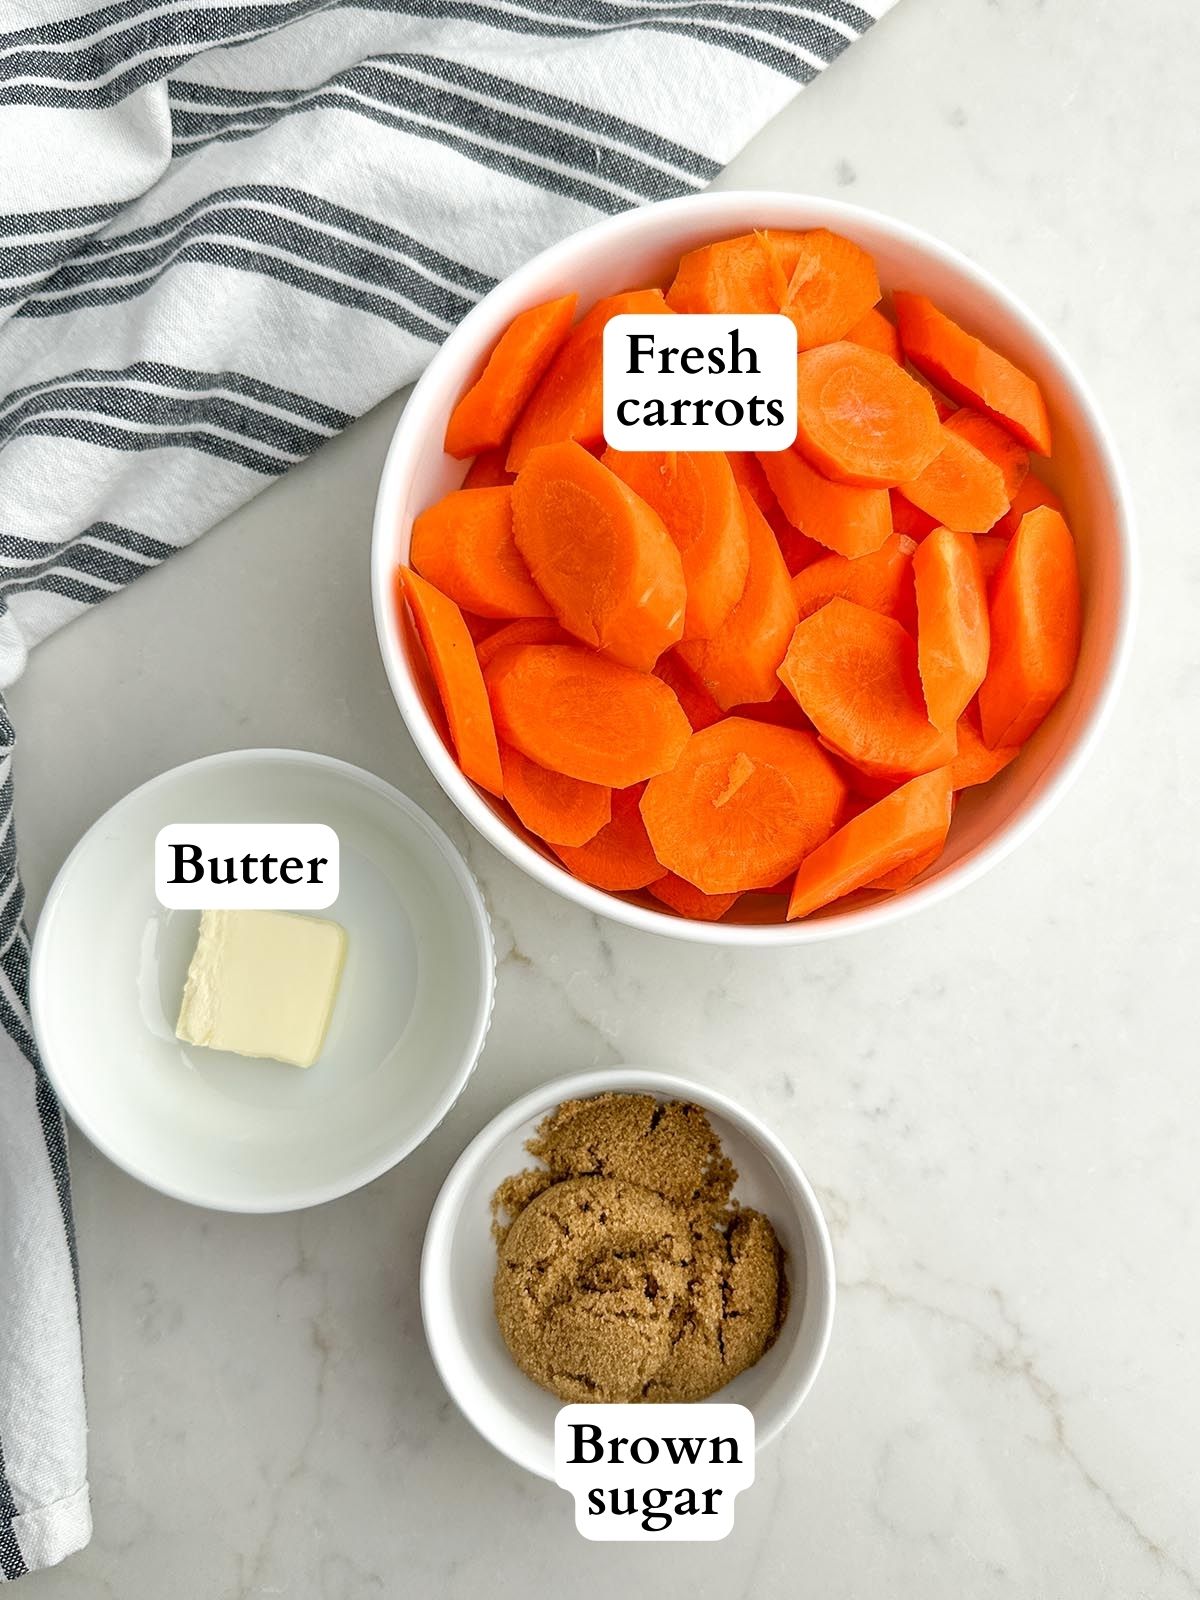 microwave steamed carrots ingredients.